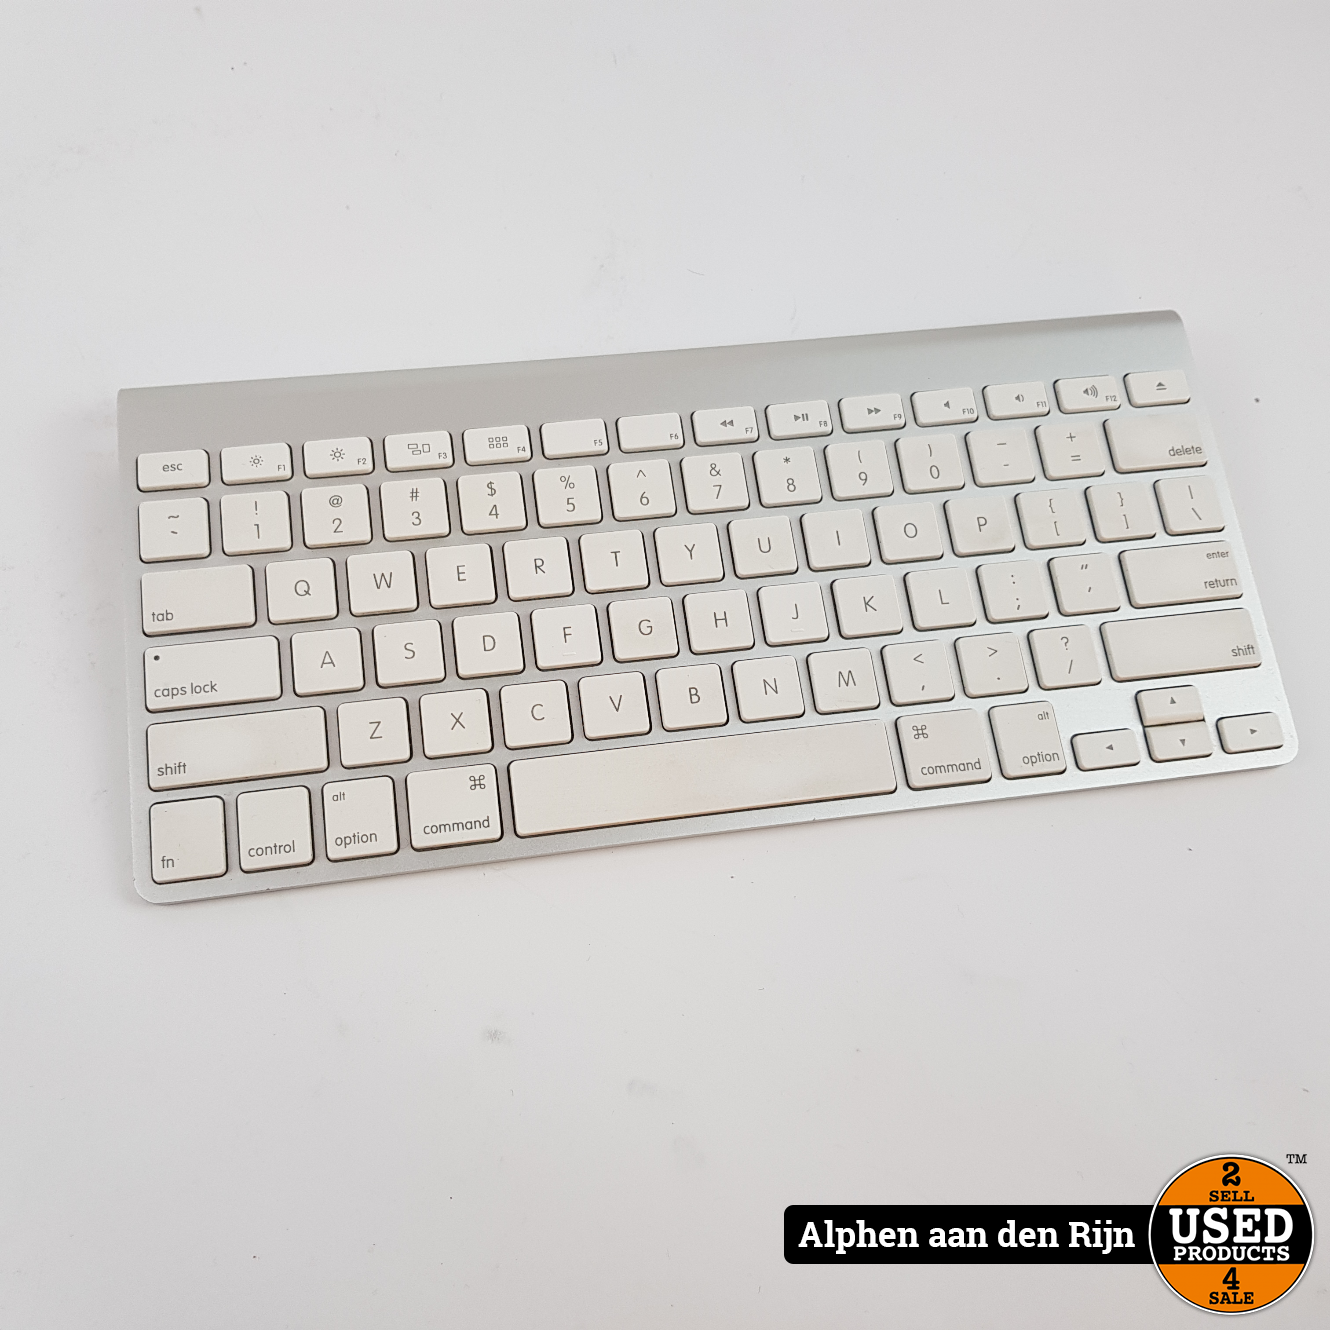 karton Varken flexibel Apple Magic keyboard A1314 - Used Products Alphen aan den Rijn